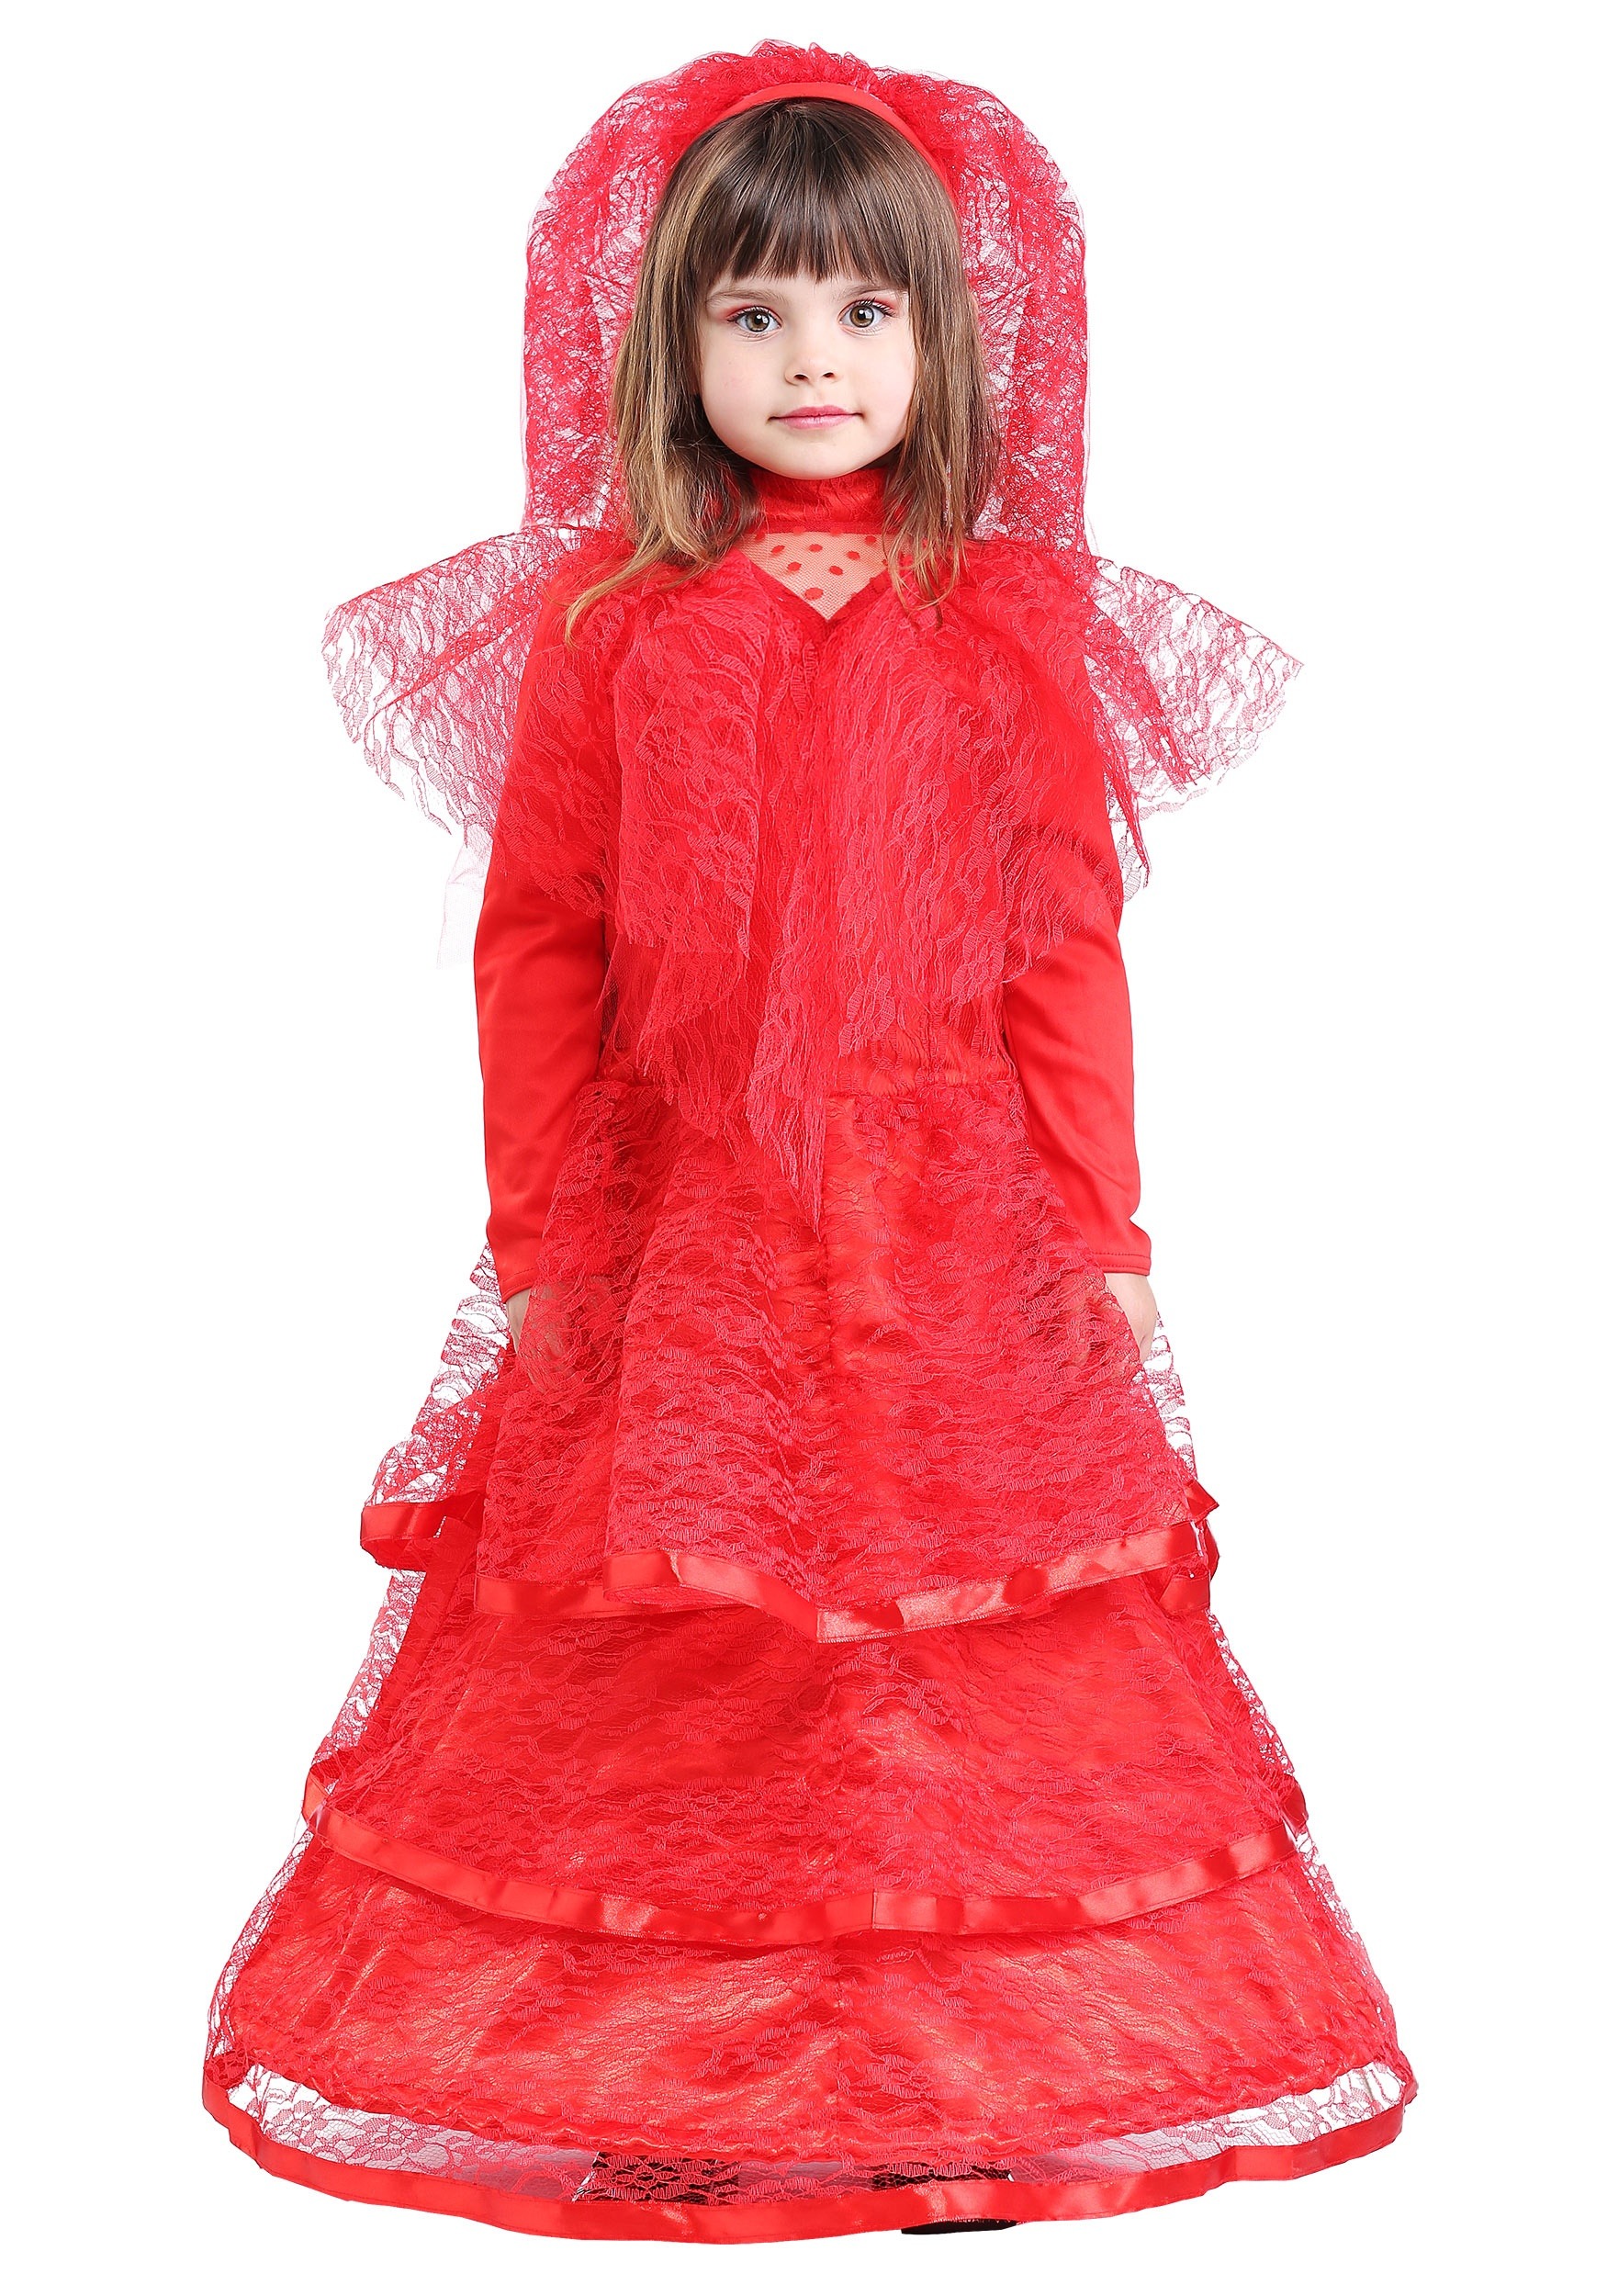 Photos - Fancy Dress Winsun Dress FUN Costumes Gothic Red Wedding Dress Costume for Young Girls 